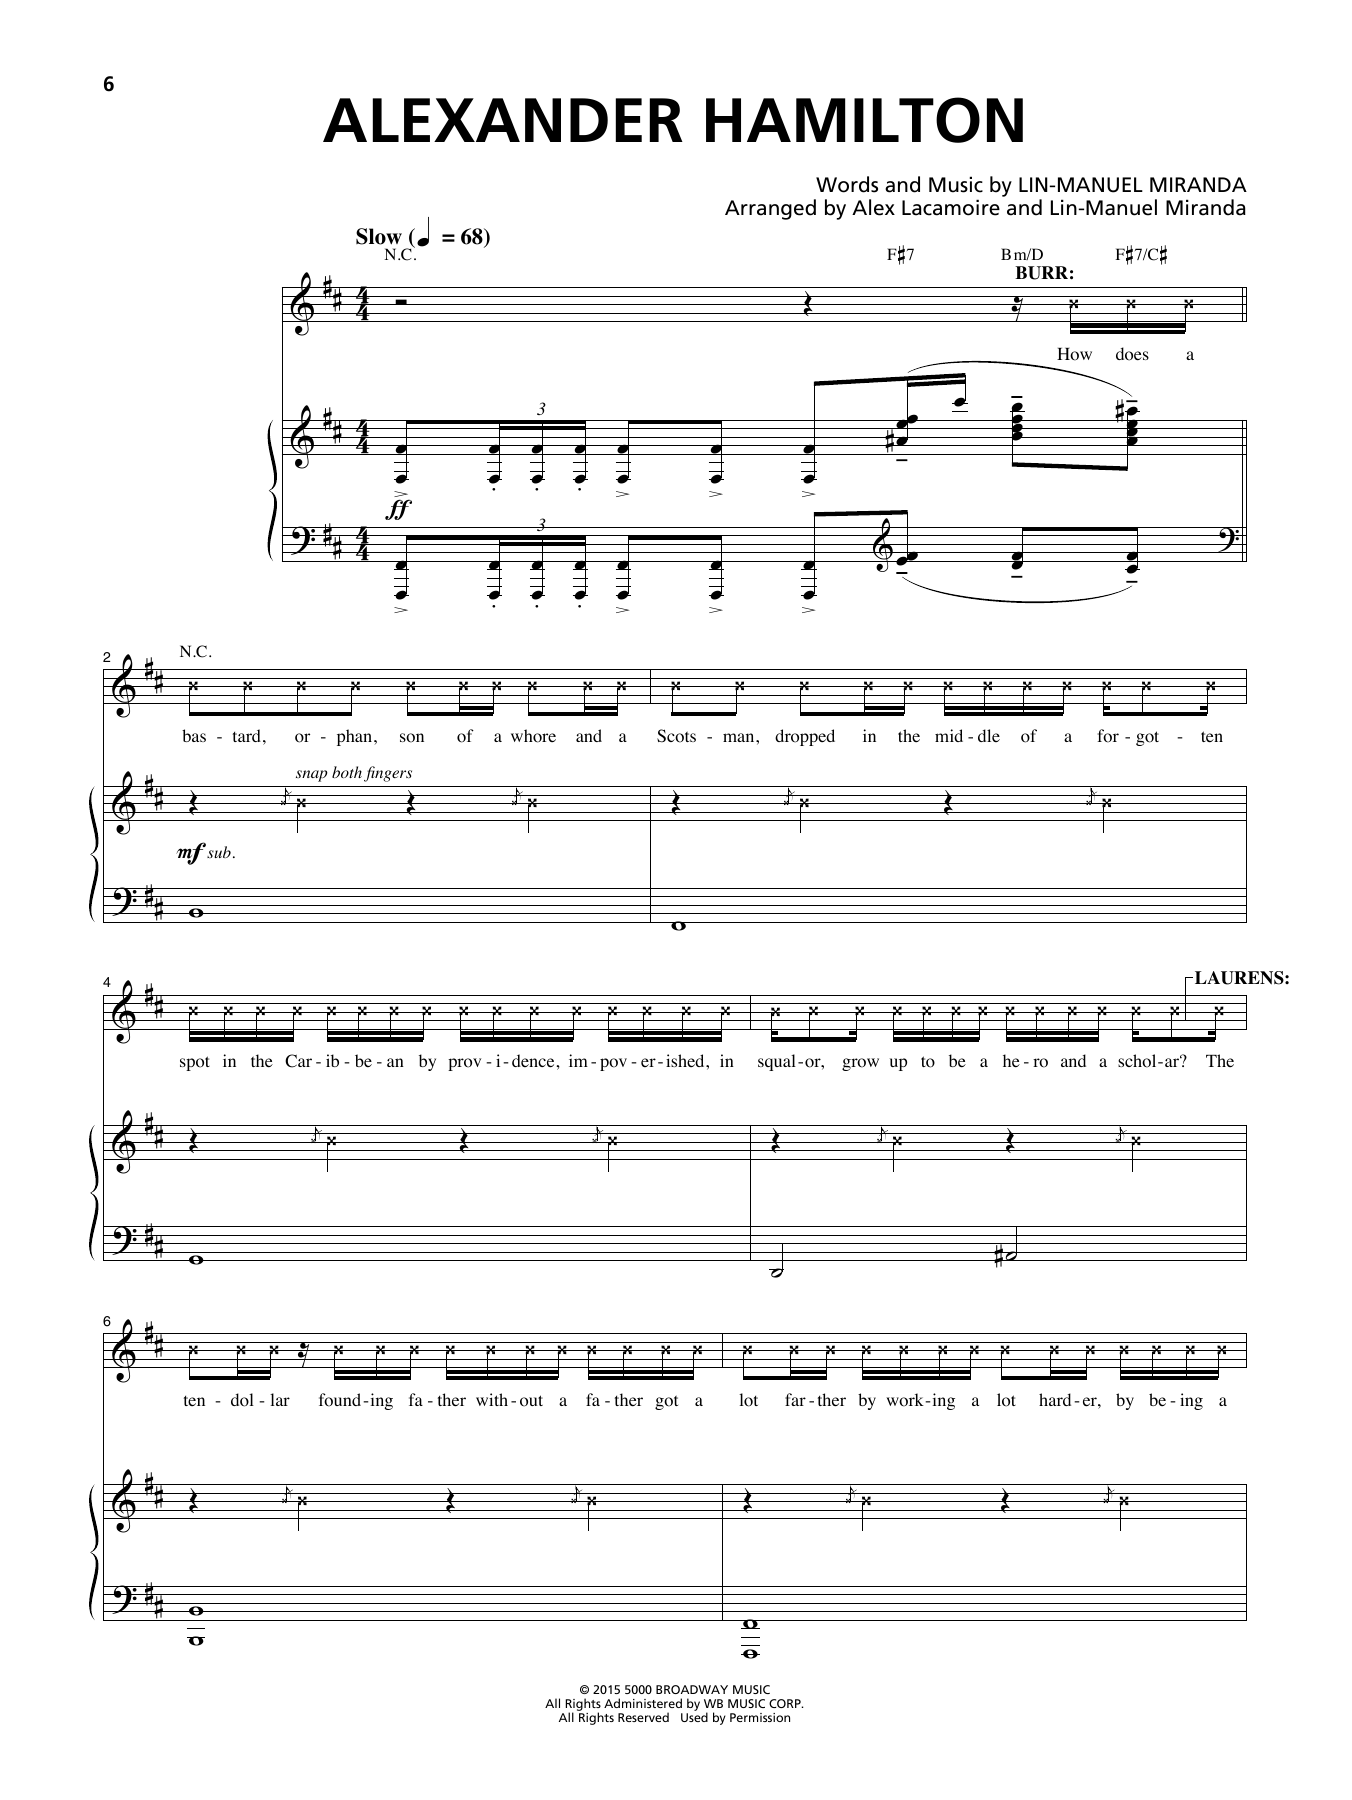 Download Lin-Manuel Miranda Alexander Hamilton Sheet Music and learn how to play Lyrics & Chords PDF digital score in minutes